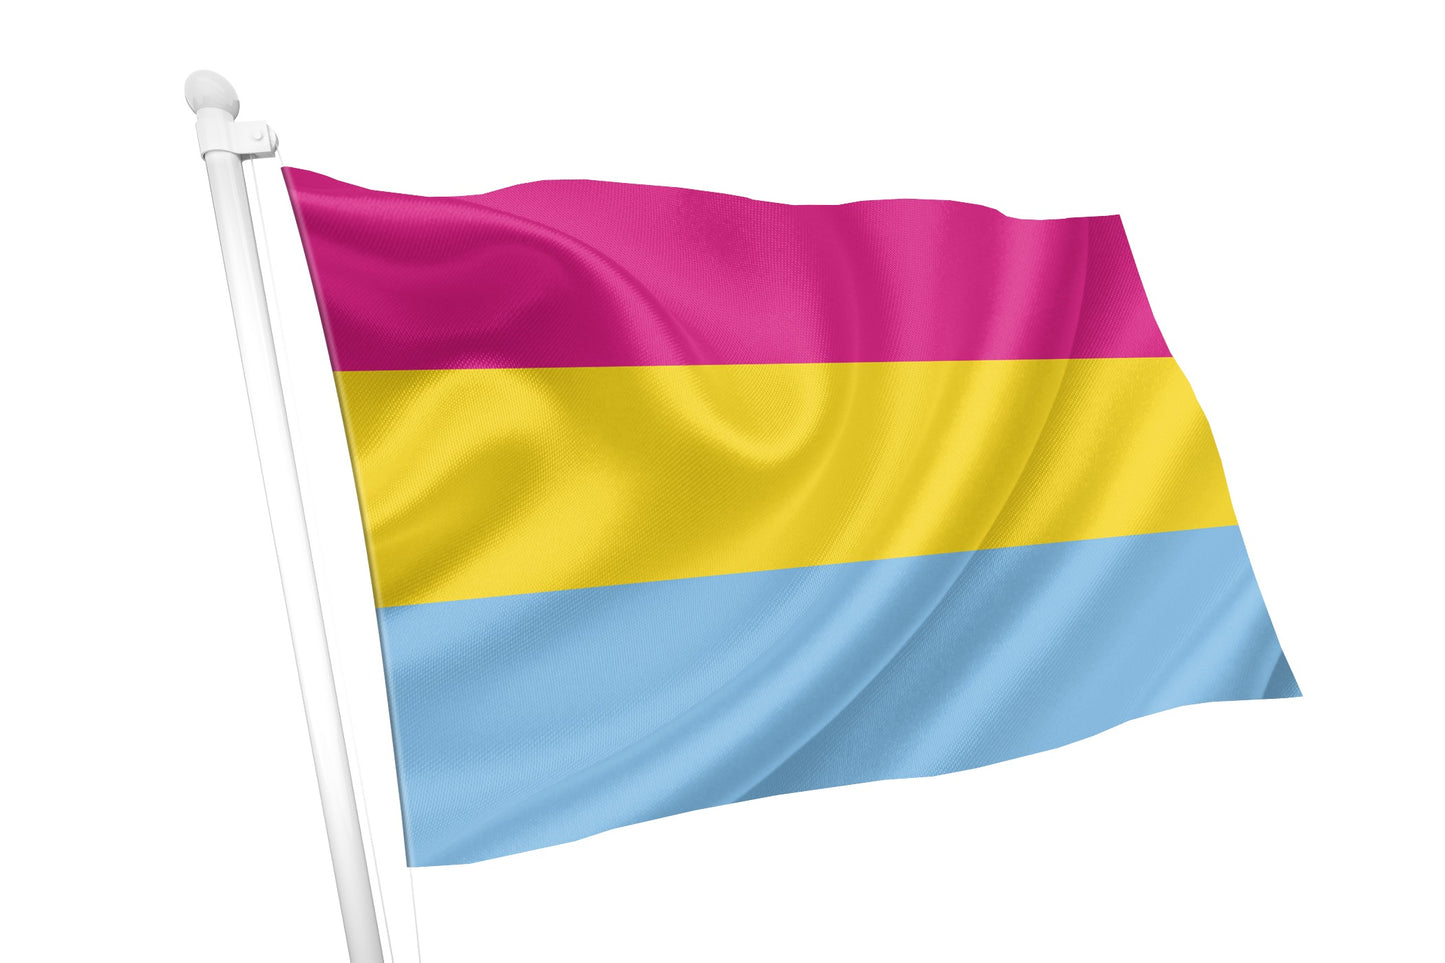 Bandeira do Orgulho Pansexual